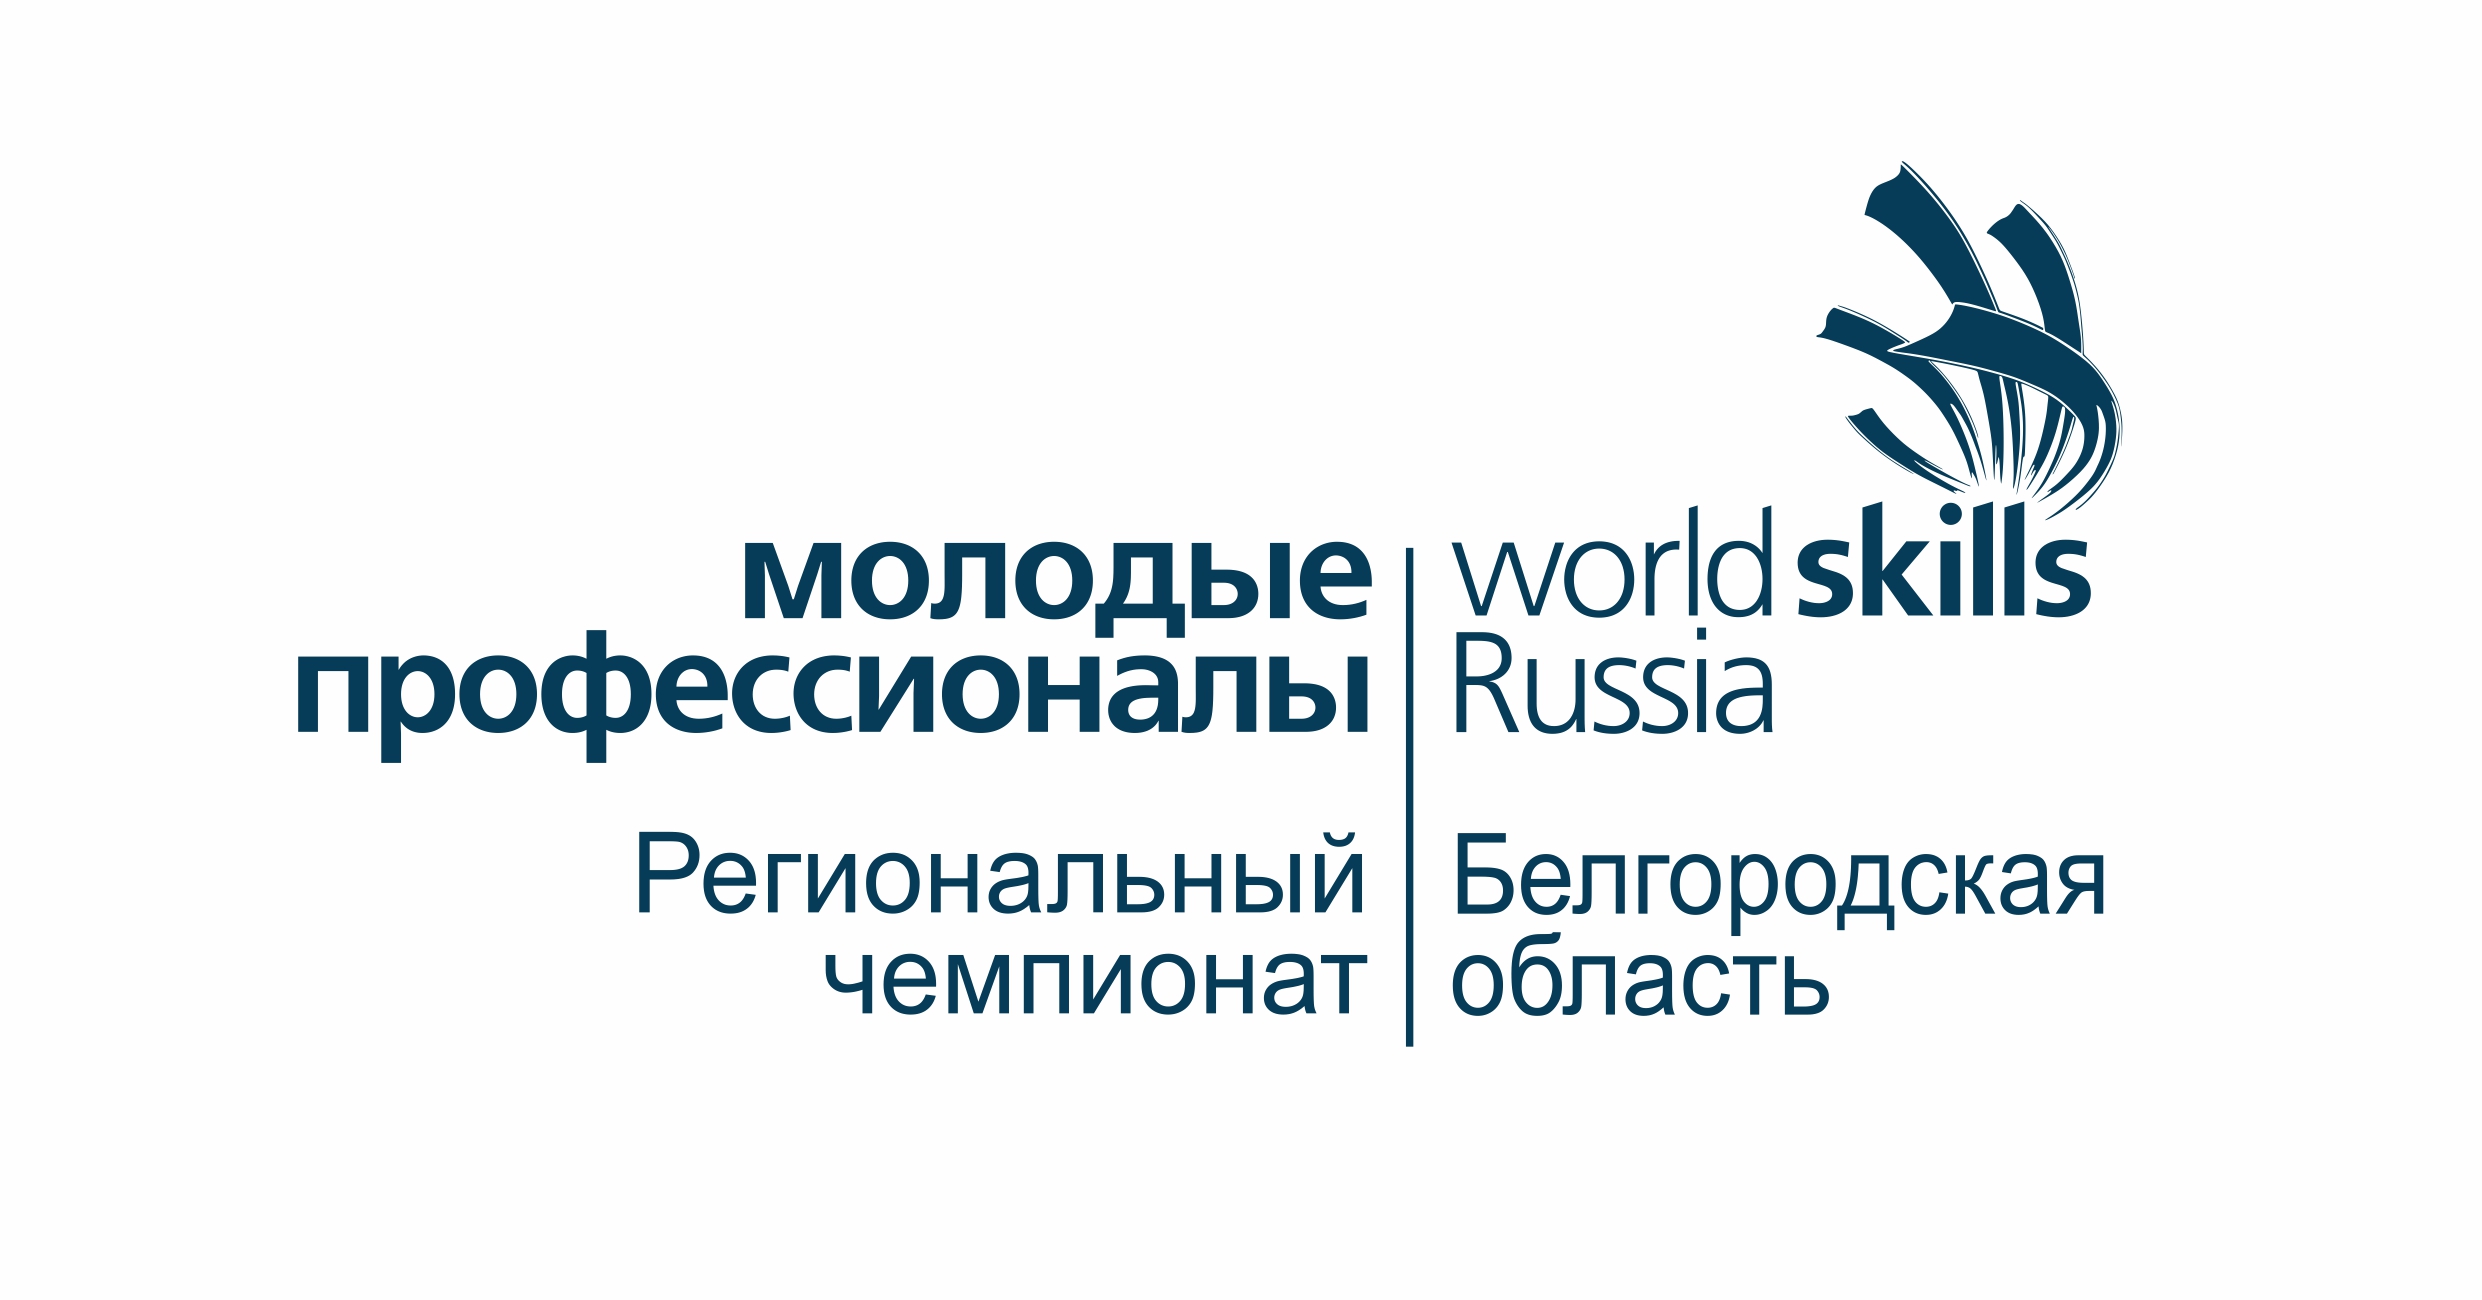 Worldskills Russia